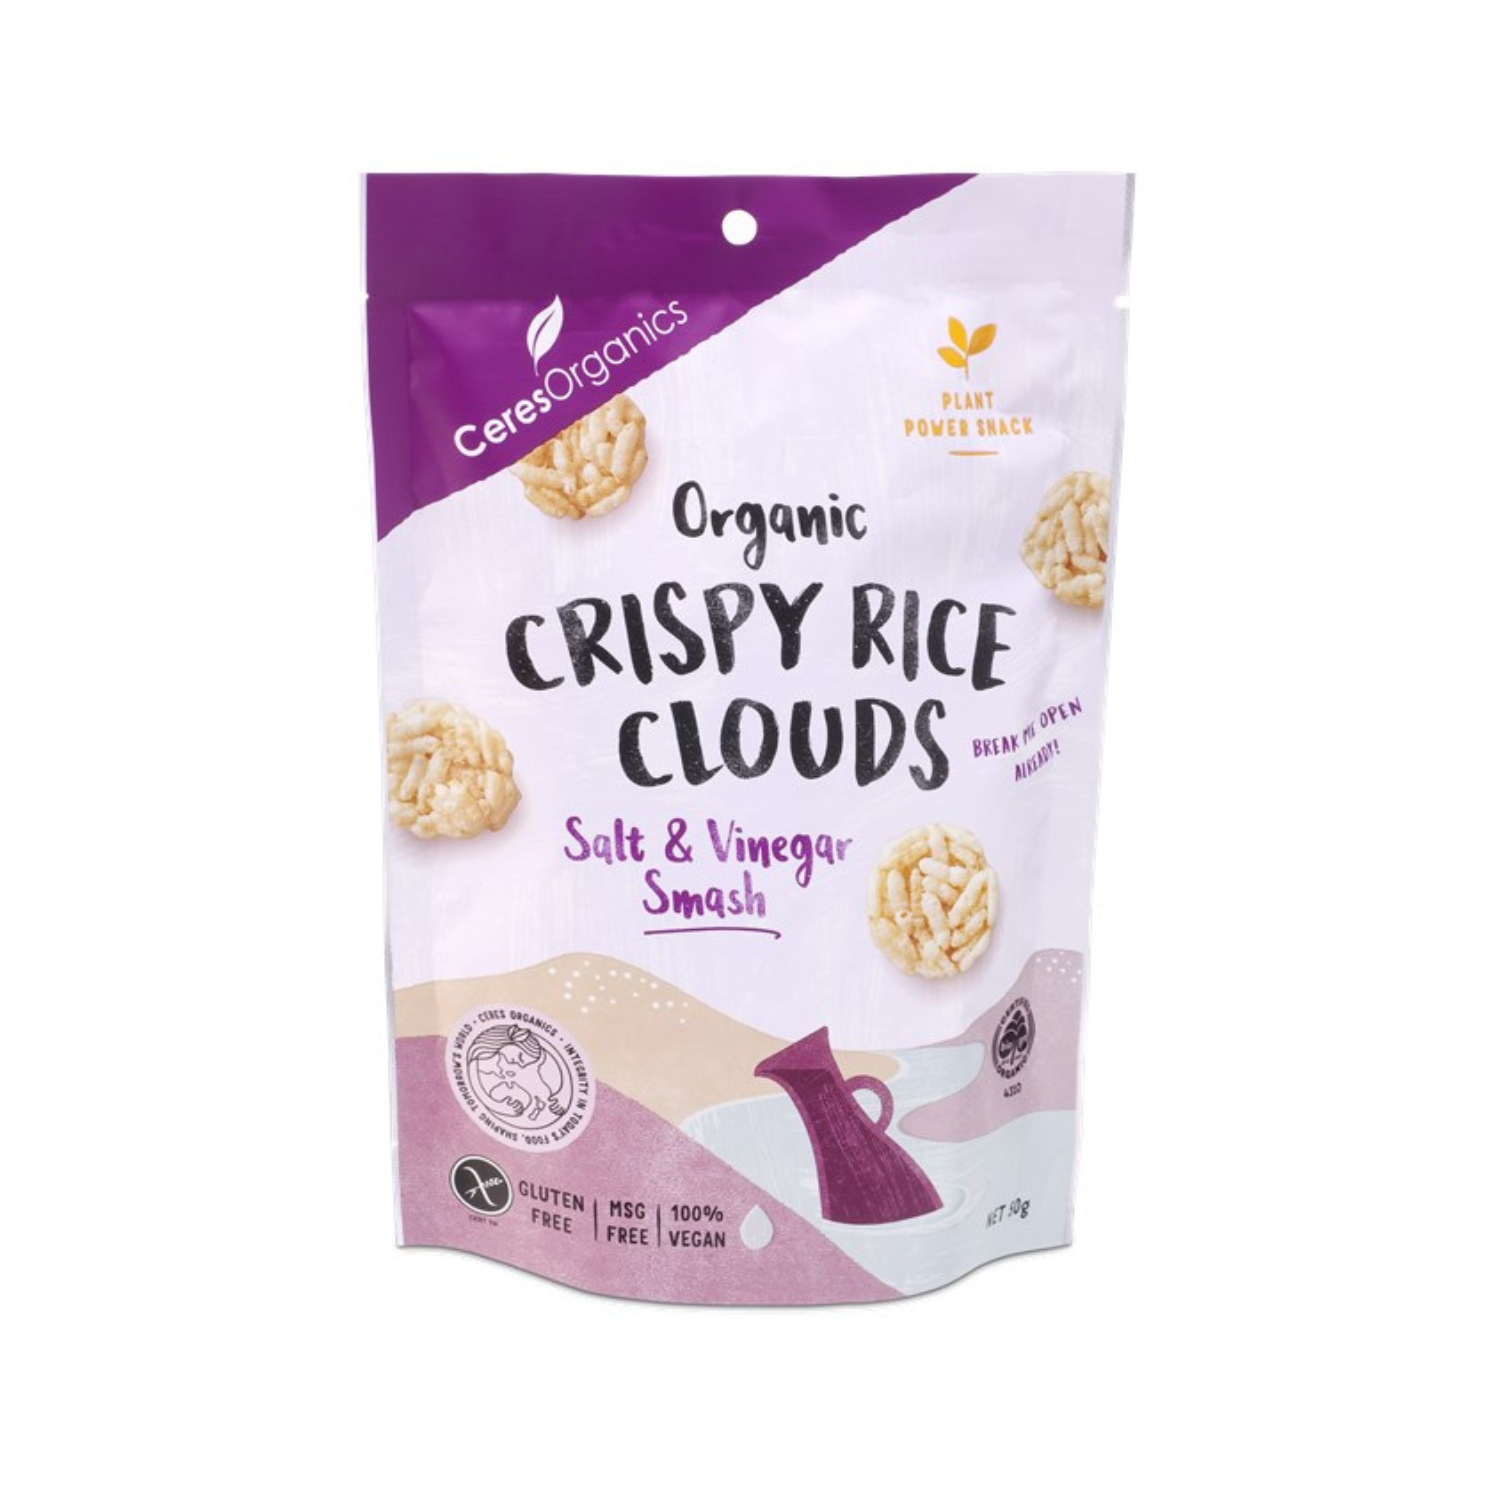 Ceres Organic Crispy Rice Clouds Salt & Vinegar Smash, 50g.